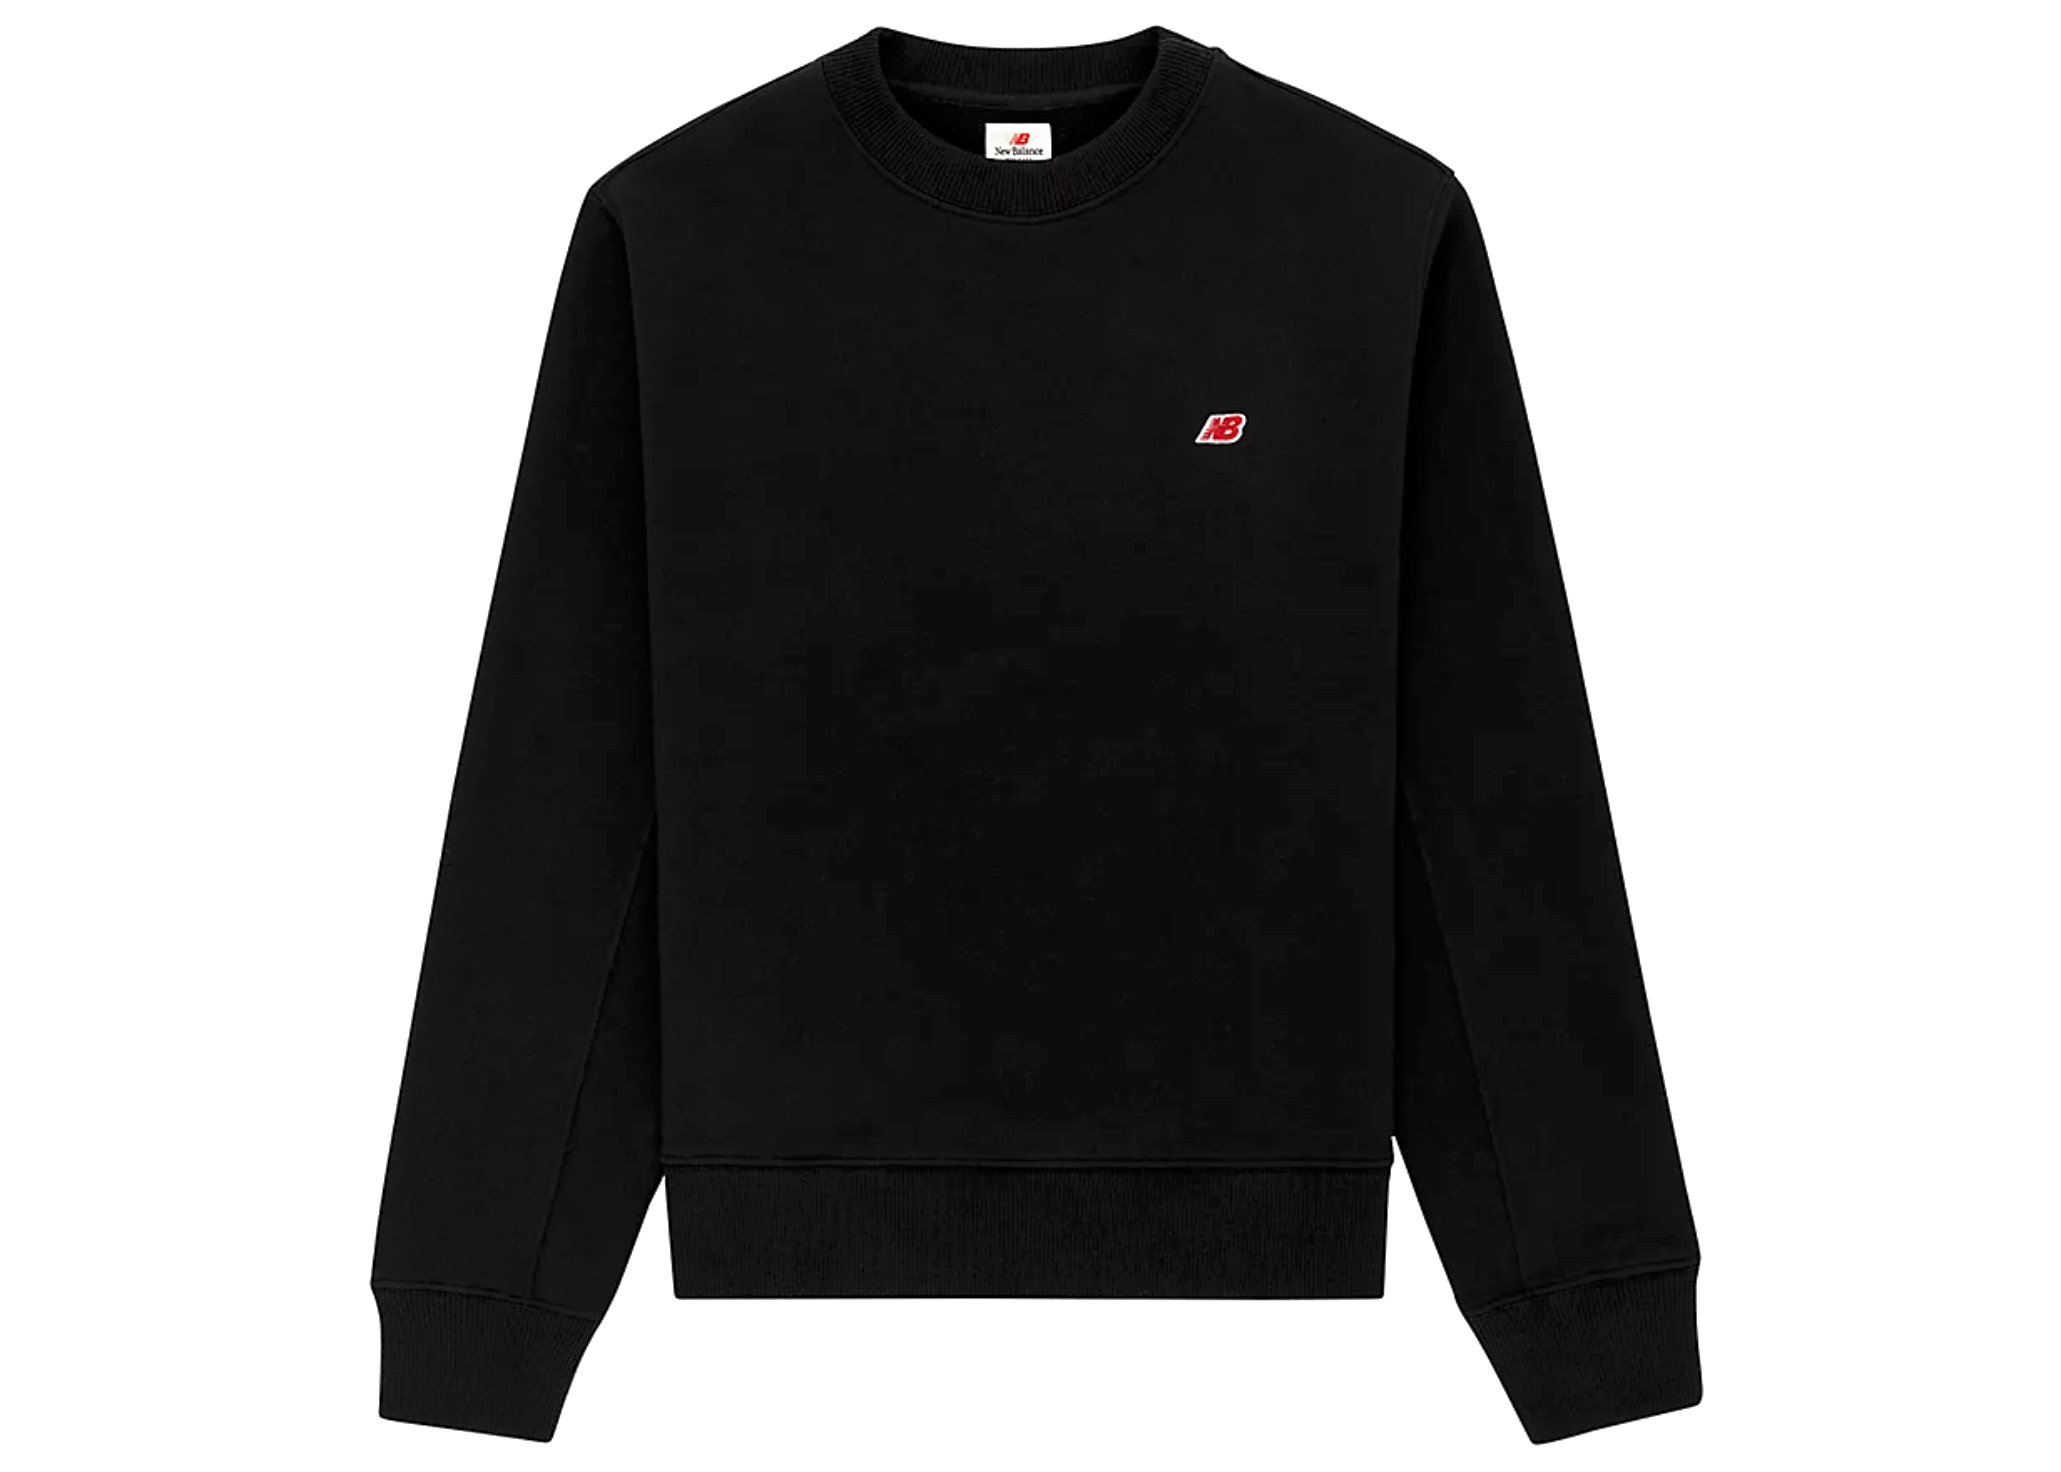 New Balance Made in USA Core Crewneck Sweatshirt Black